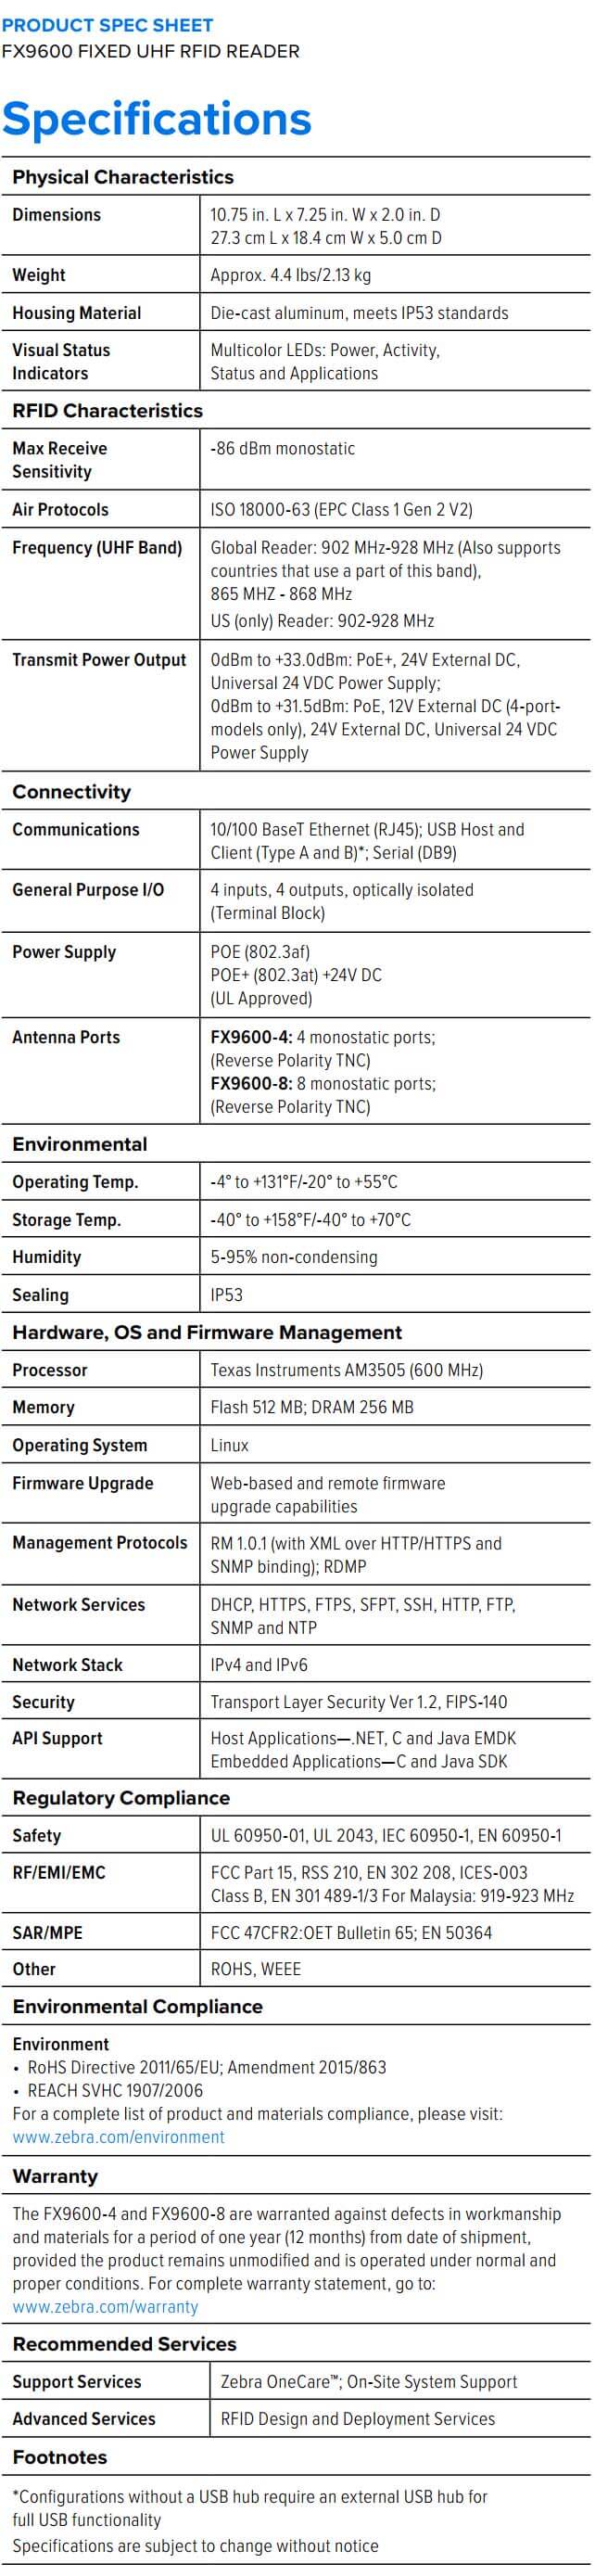 Zebra FX9600 Fixed UHF RFID data sheet